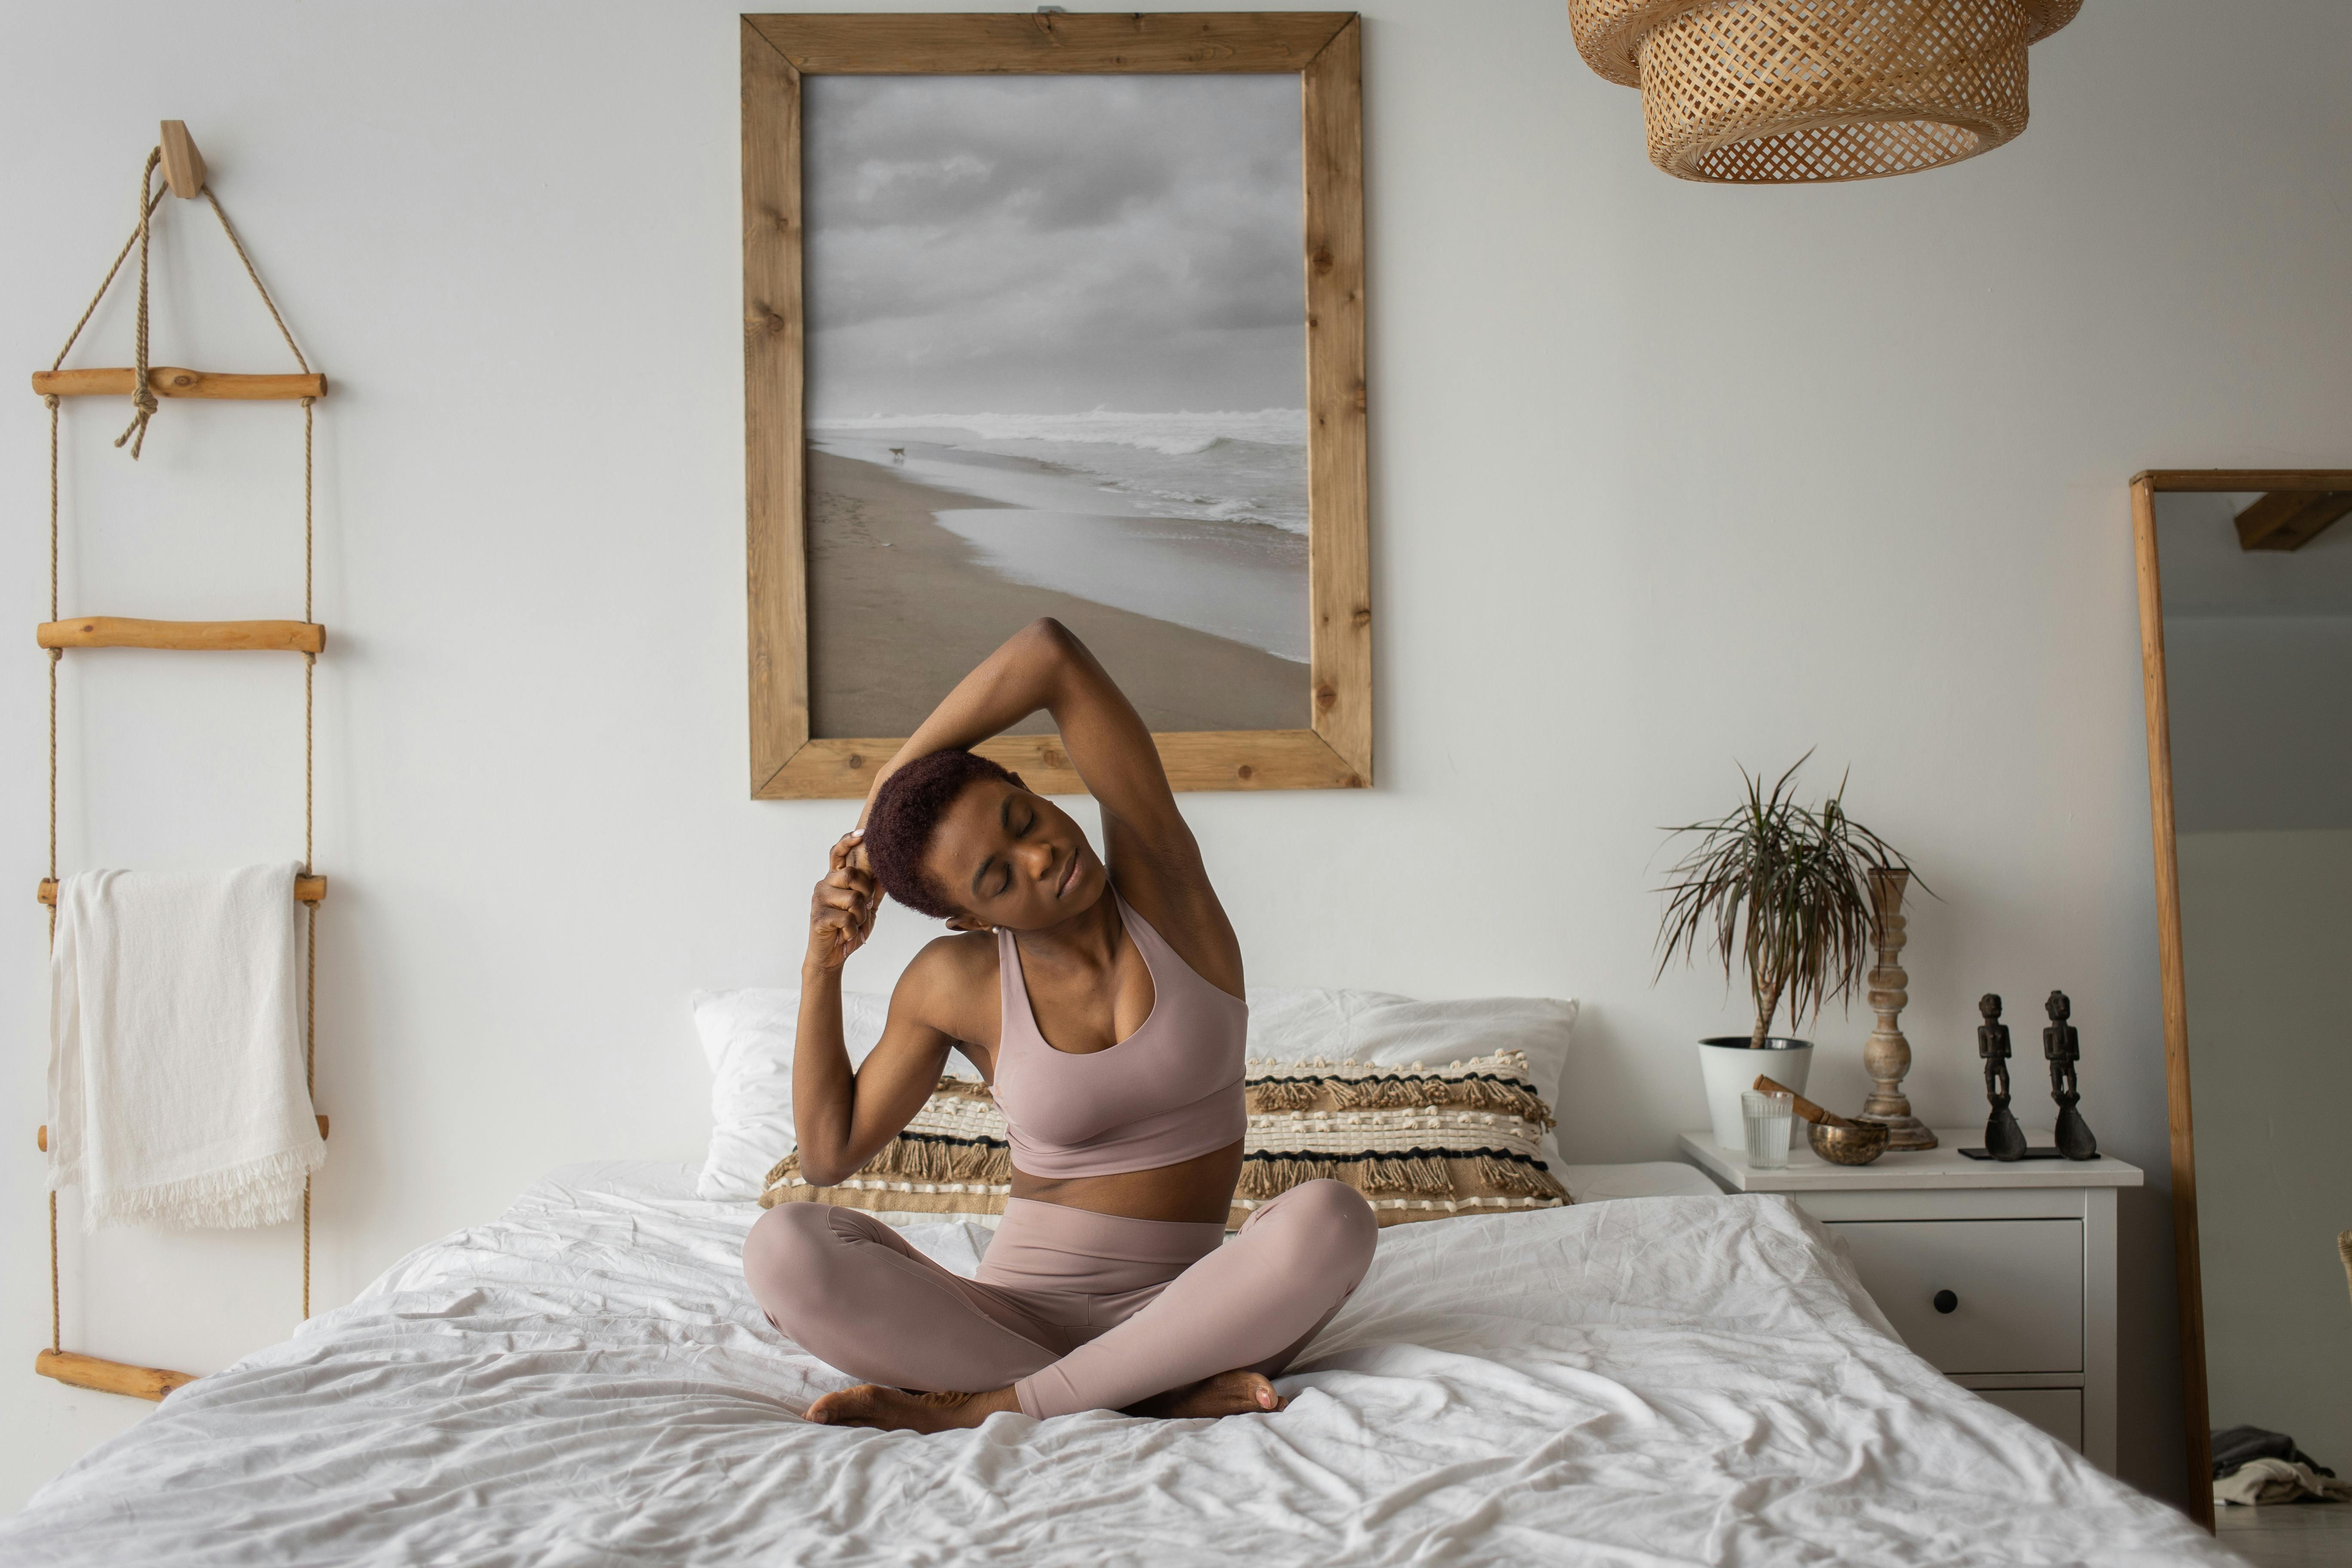 A Woman Doing a Yoga Ritual on a Yoga Mat · Free Stock Photo